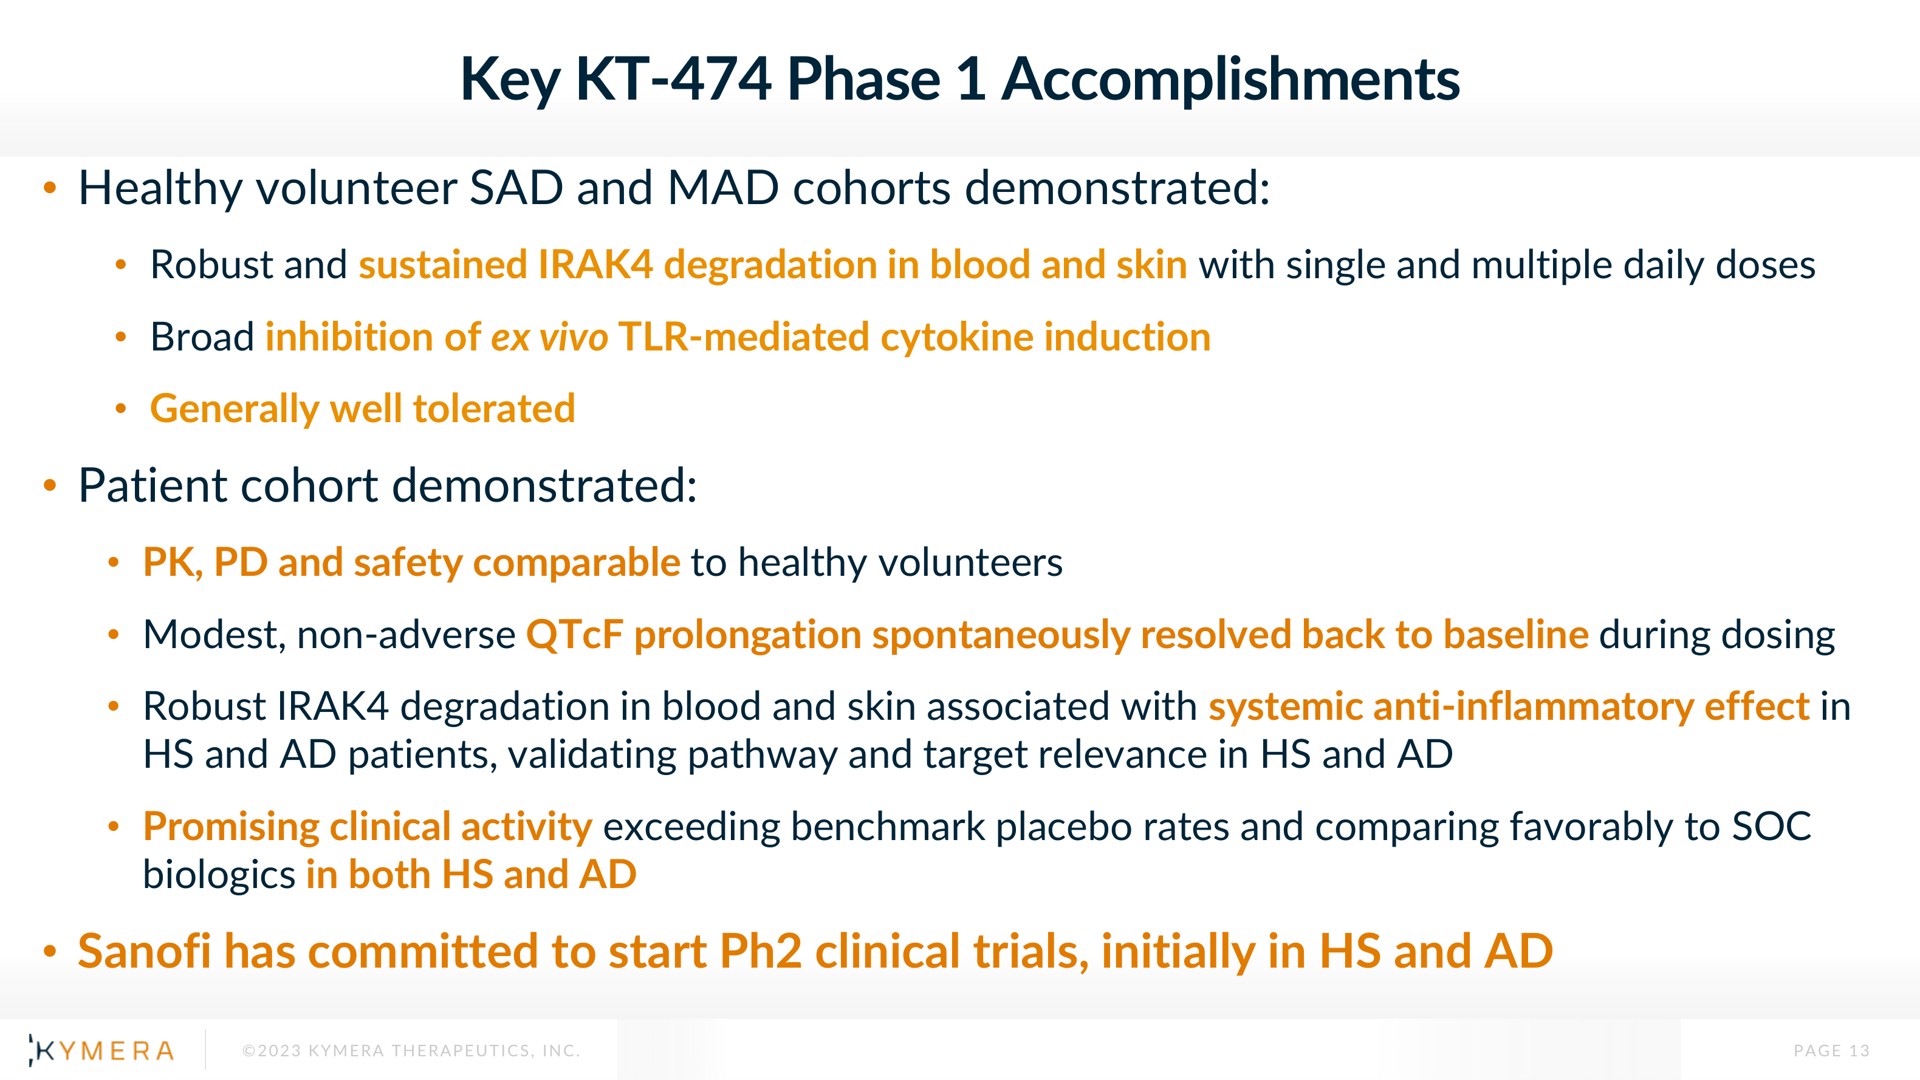 key phase accomplishments | Kymera